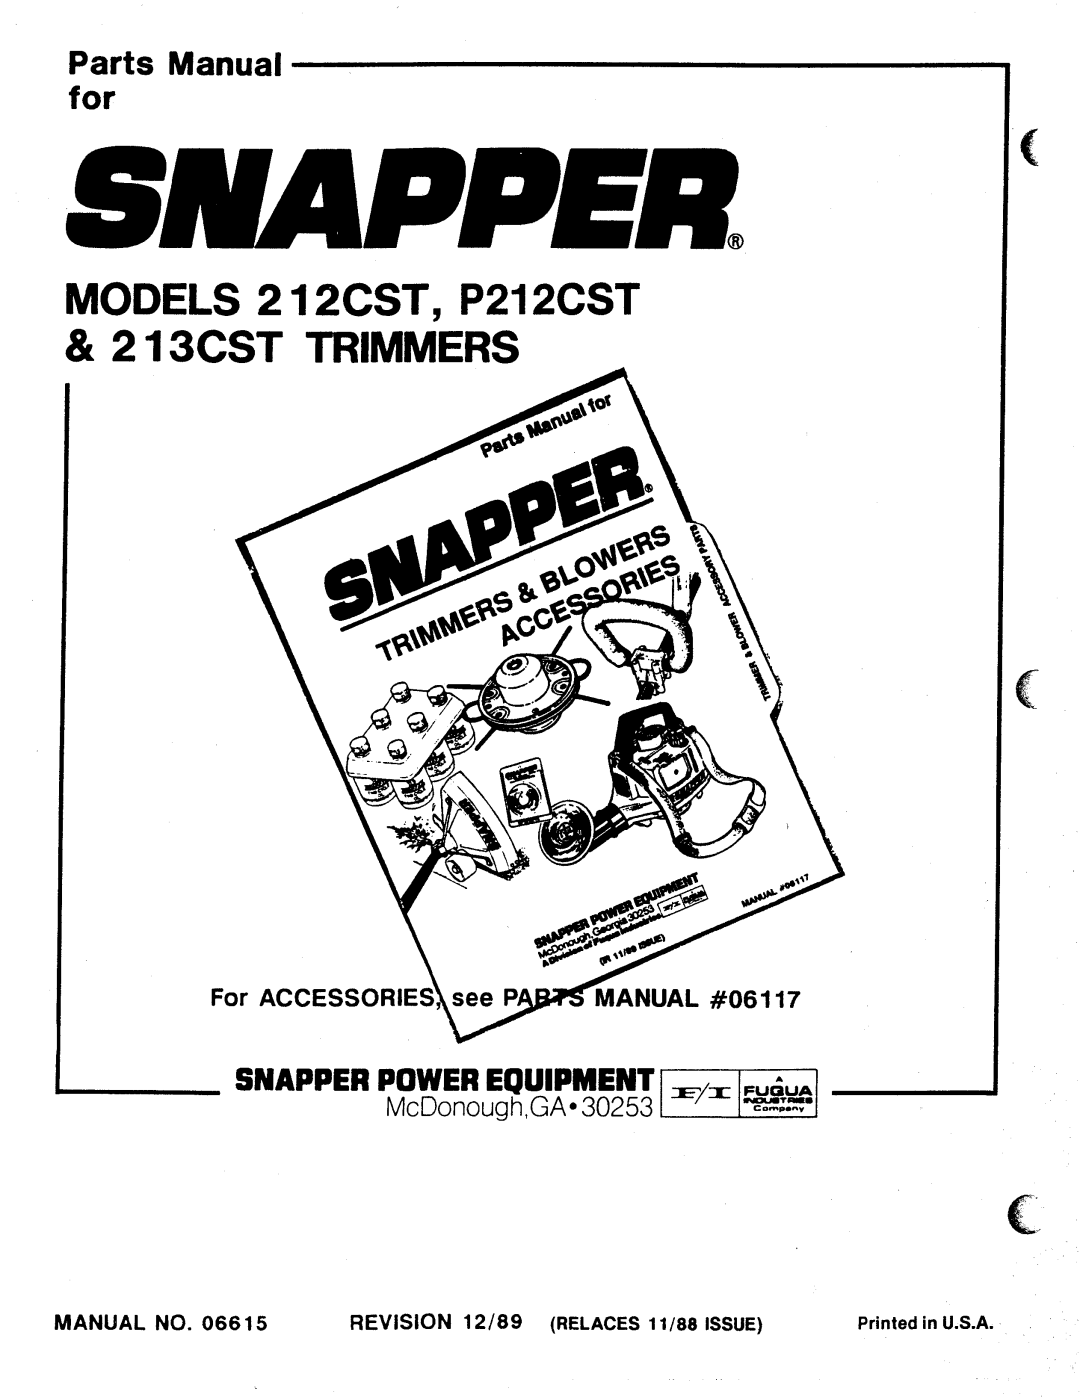 Snapper 213CST, P212CST manual 